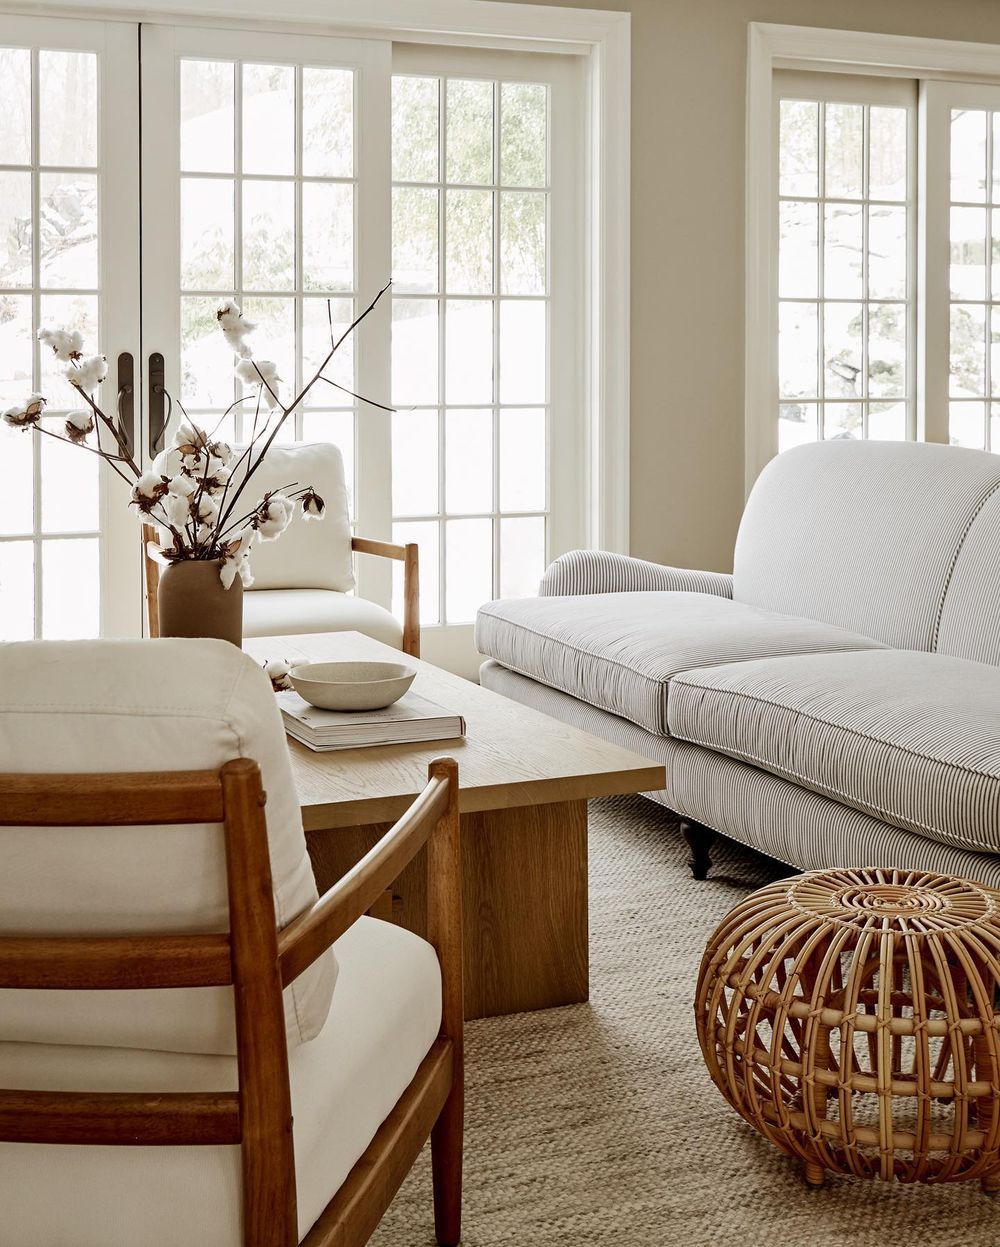 California Casual living room interior design decor rikkisnyder